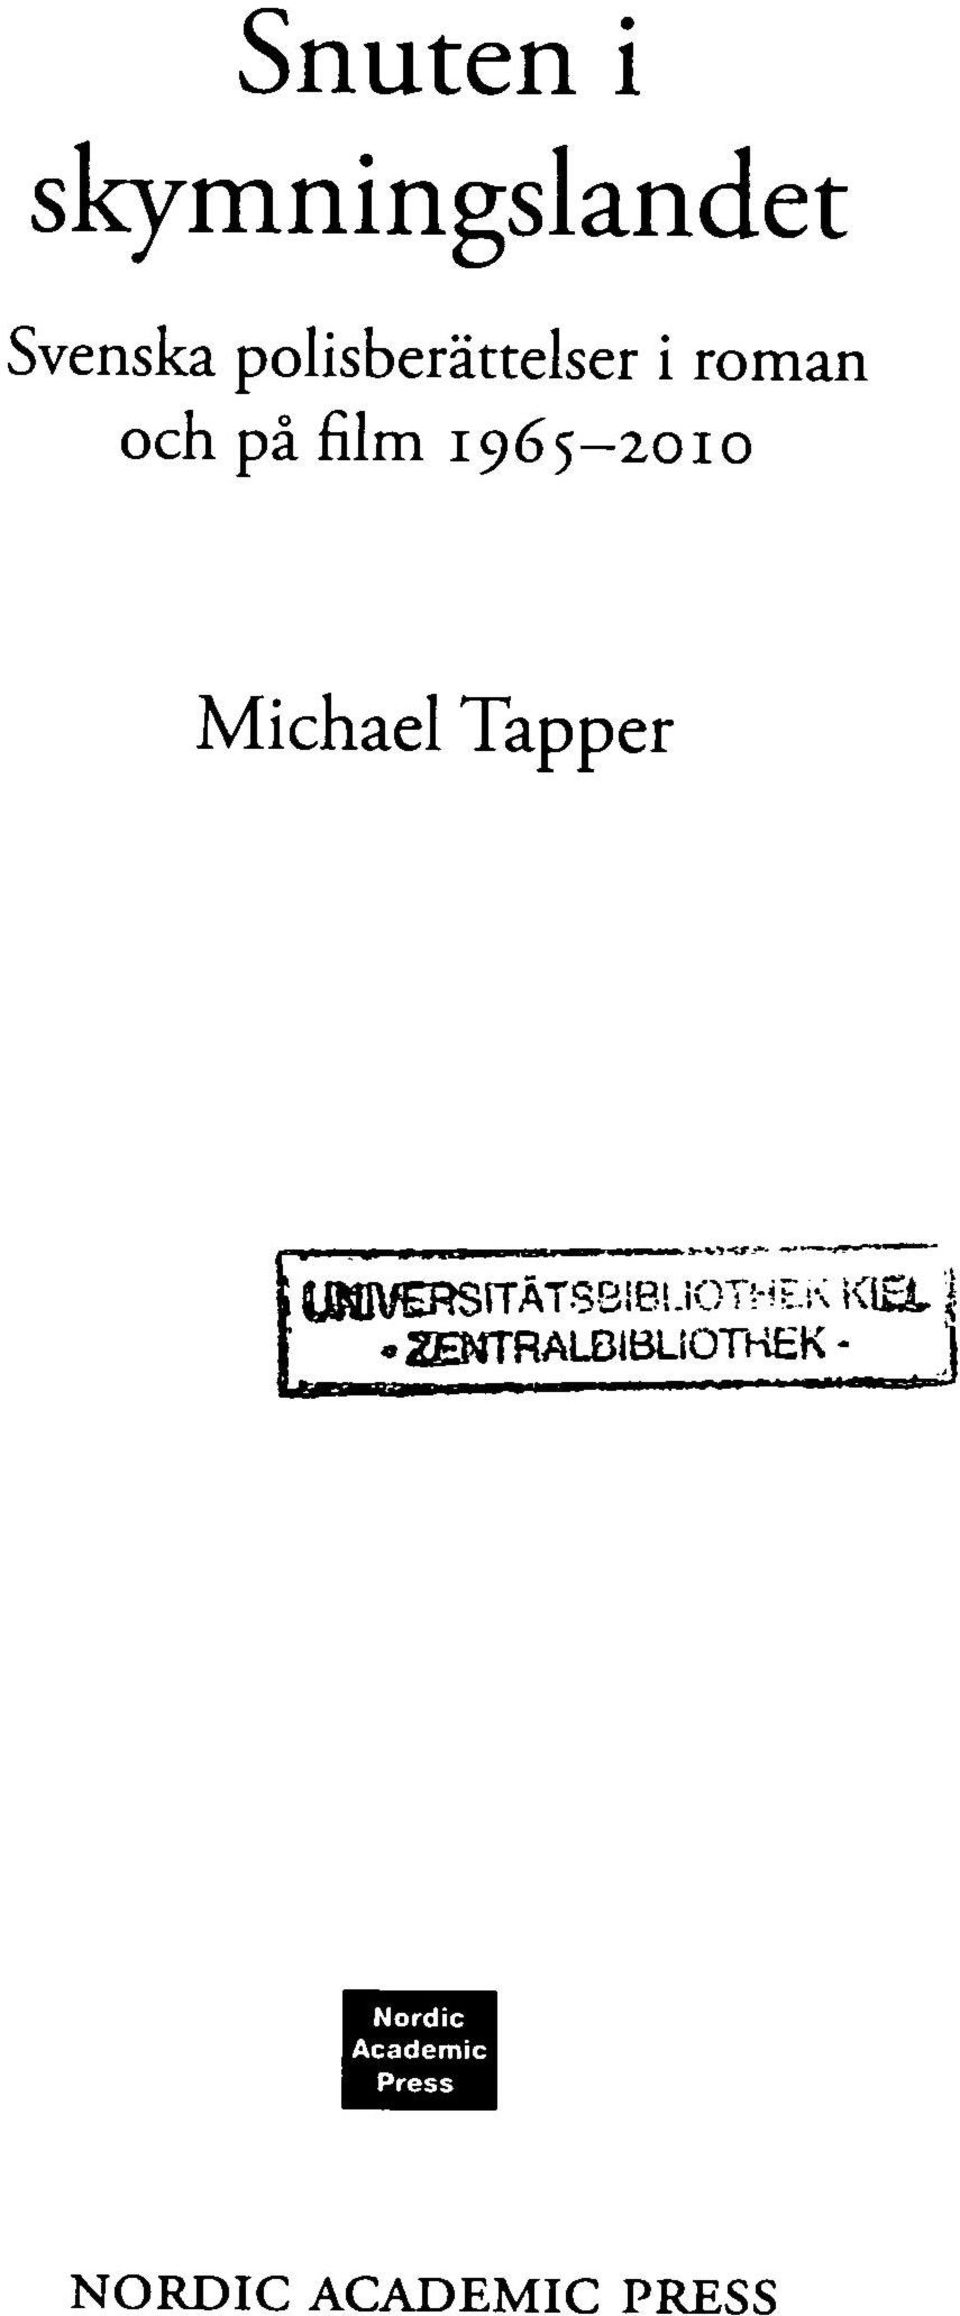 1965-2010 Michael Tapper USWERSrTÄTSBiBUOTHEK